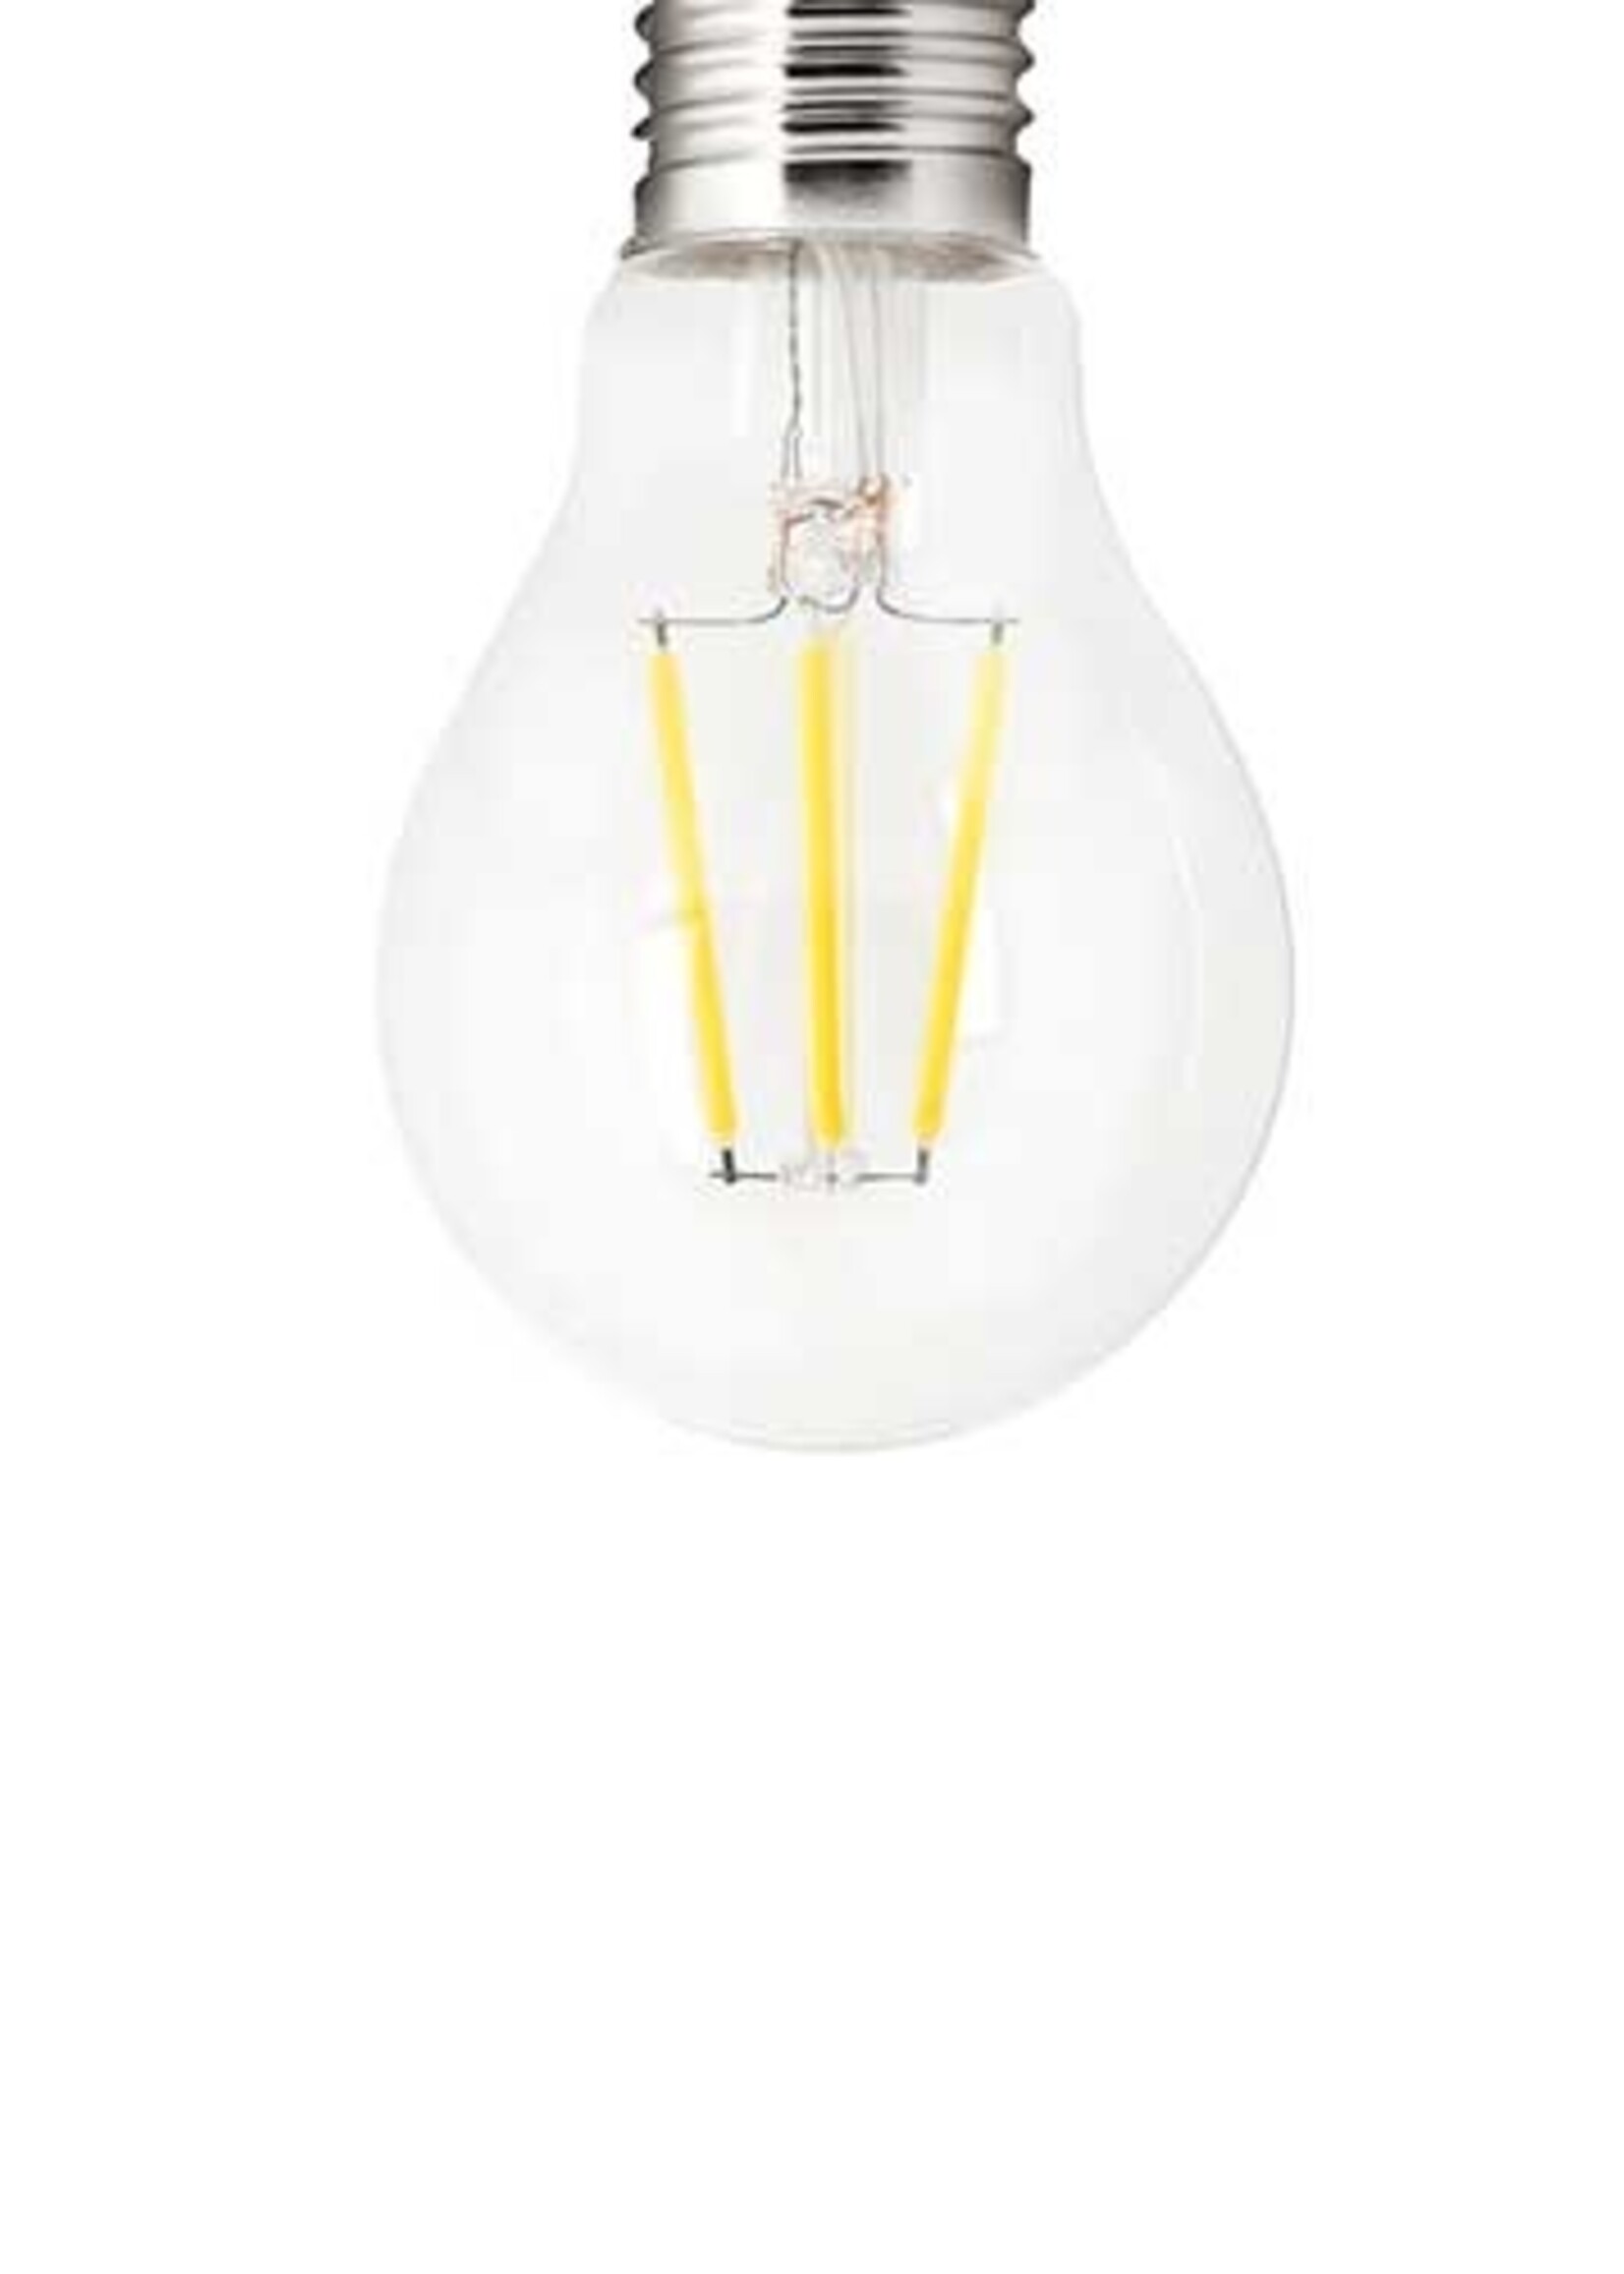 LEDWINKEL-Online E27 LED Lamp filament A60 5W 2200K dimbaar